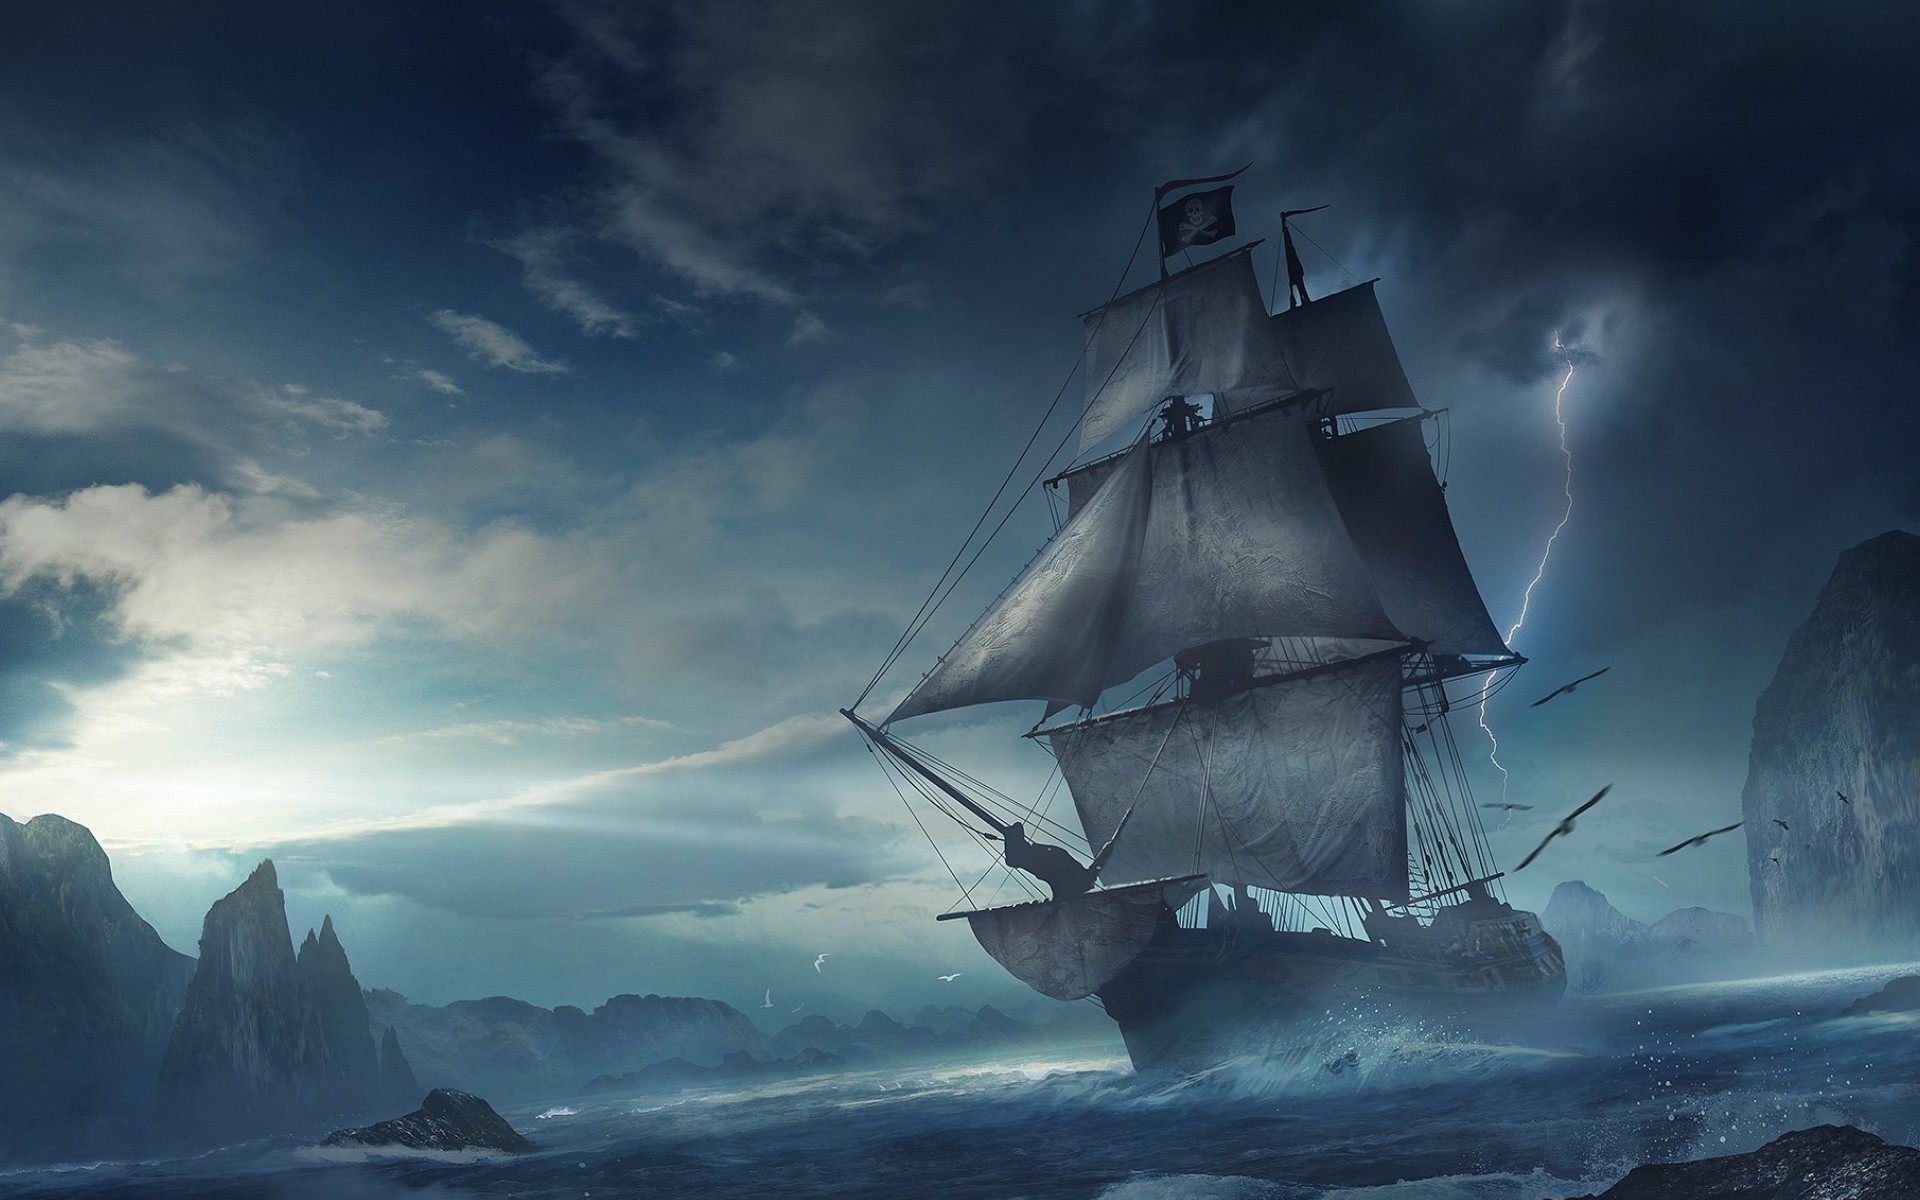 General 1920x1200 sailing ship pirates fantasy art skull and bones lightning sea rigging (ship) vehicle digital art